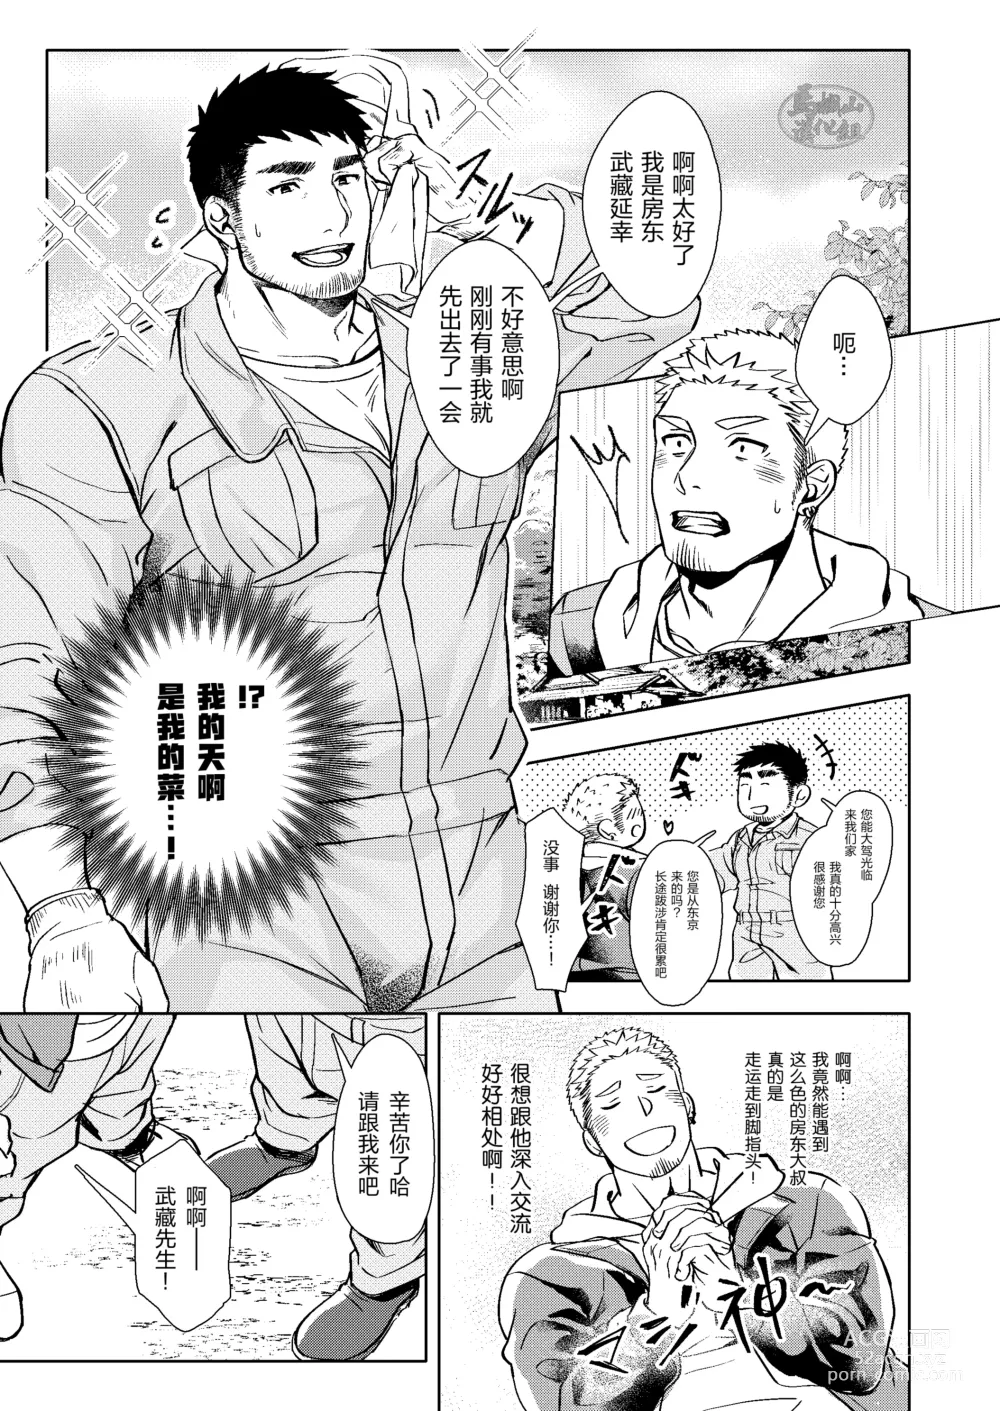 Page 7 of doujinshi 逢胸化吉